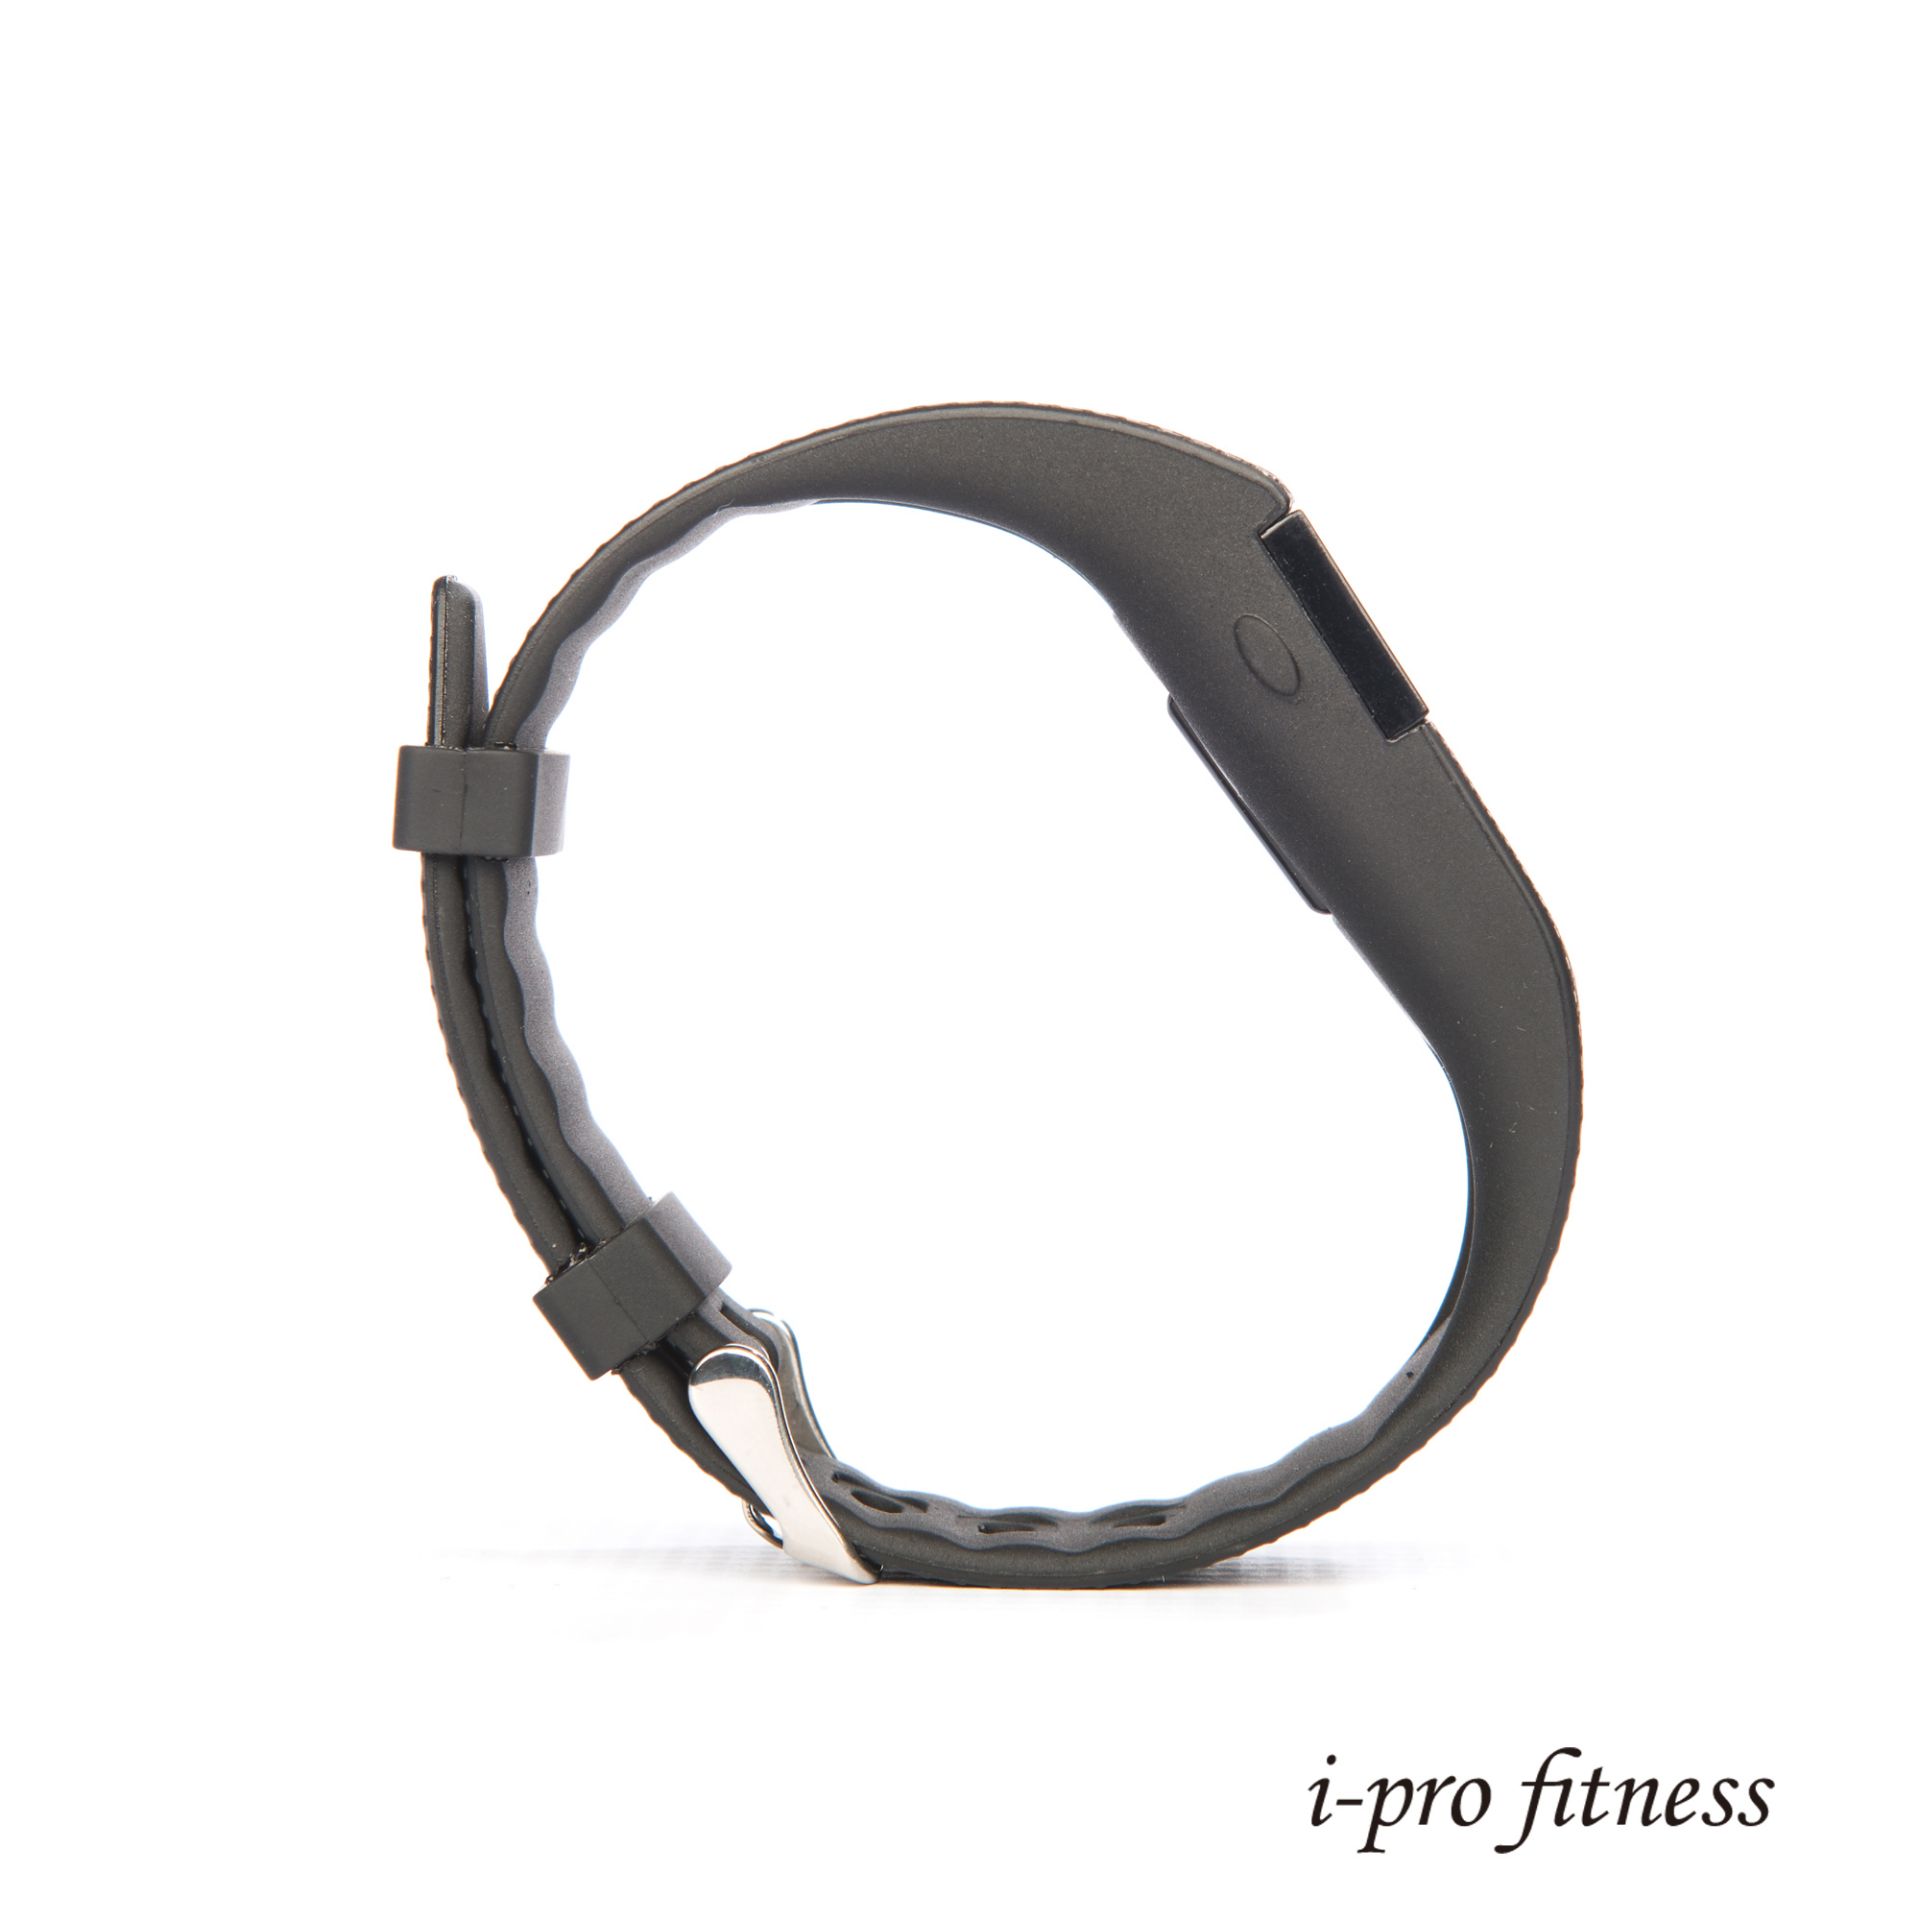 20x Fitness Tracker i-pro fitness, Bluetooth 4.0 Sports Smart Bracelet. - Image 5 of 8